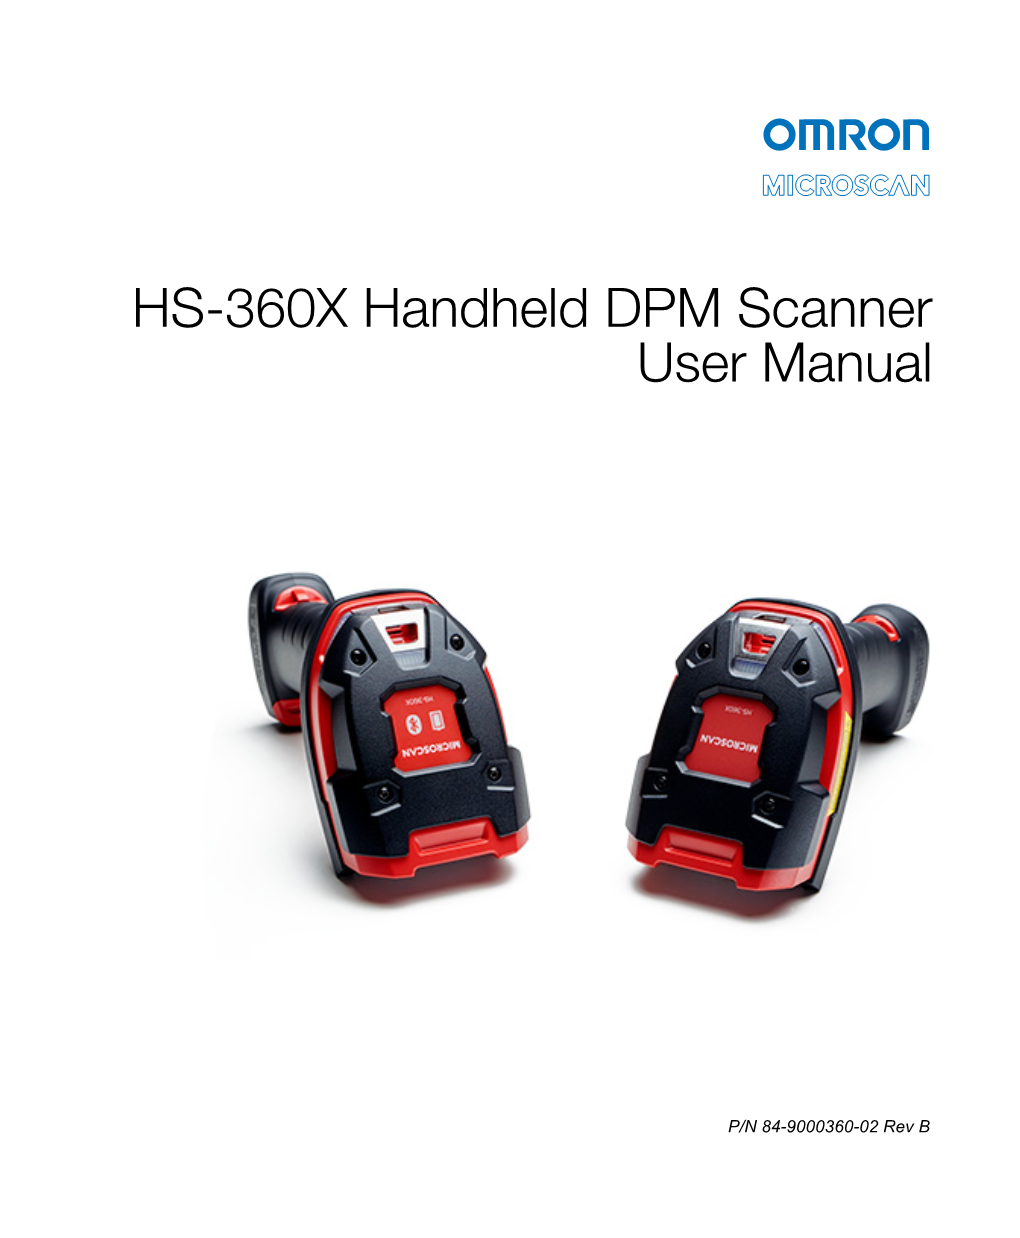 HS-360X Handheld DPM Scanner User Manual